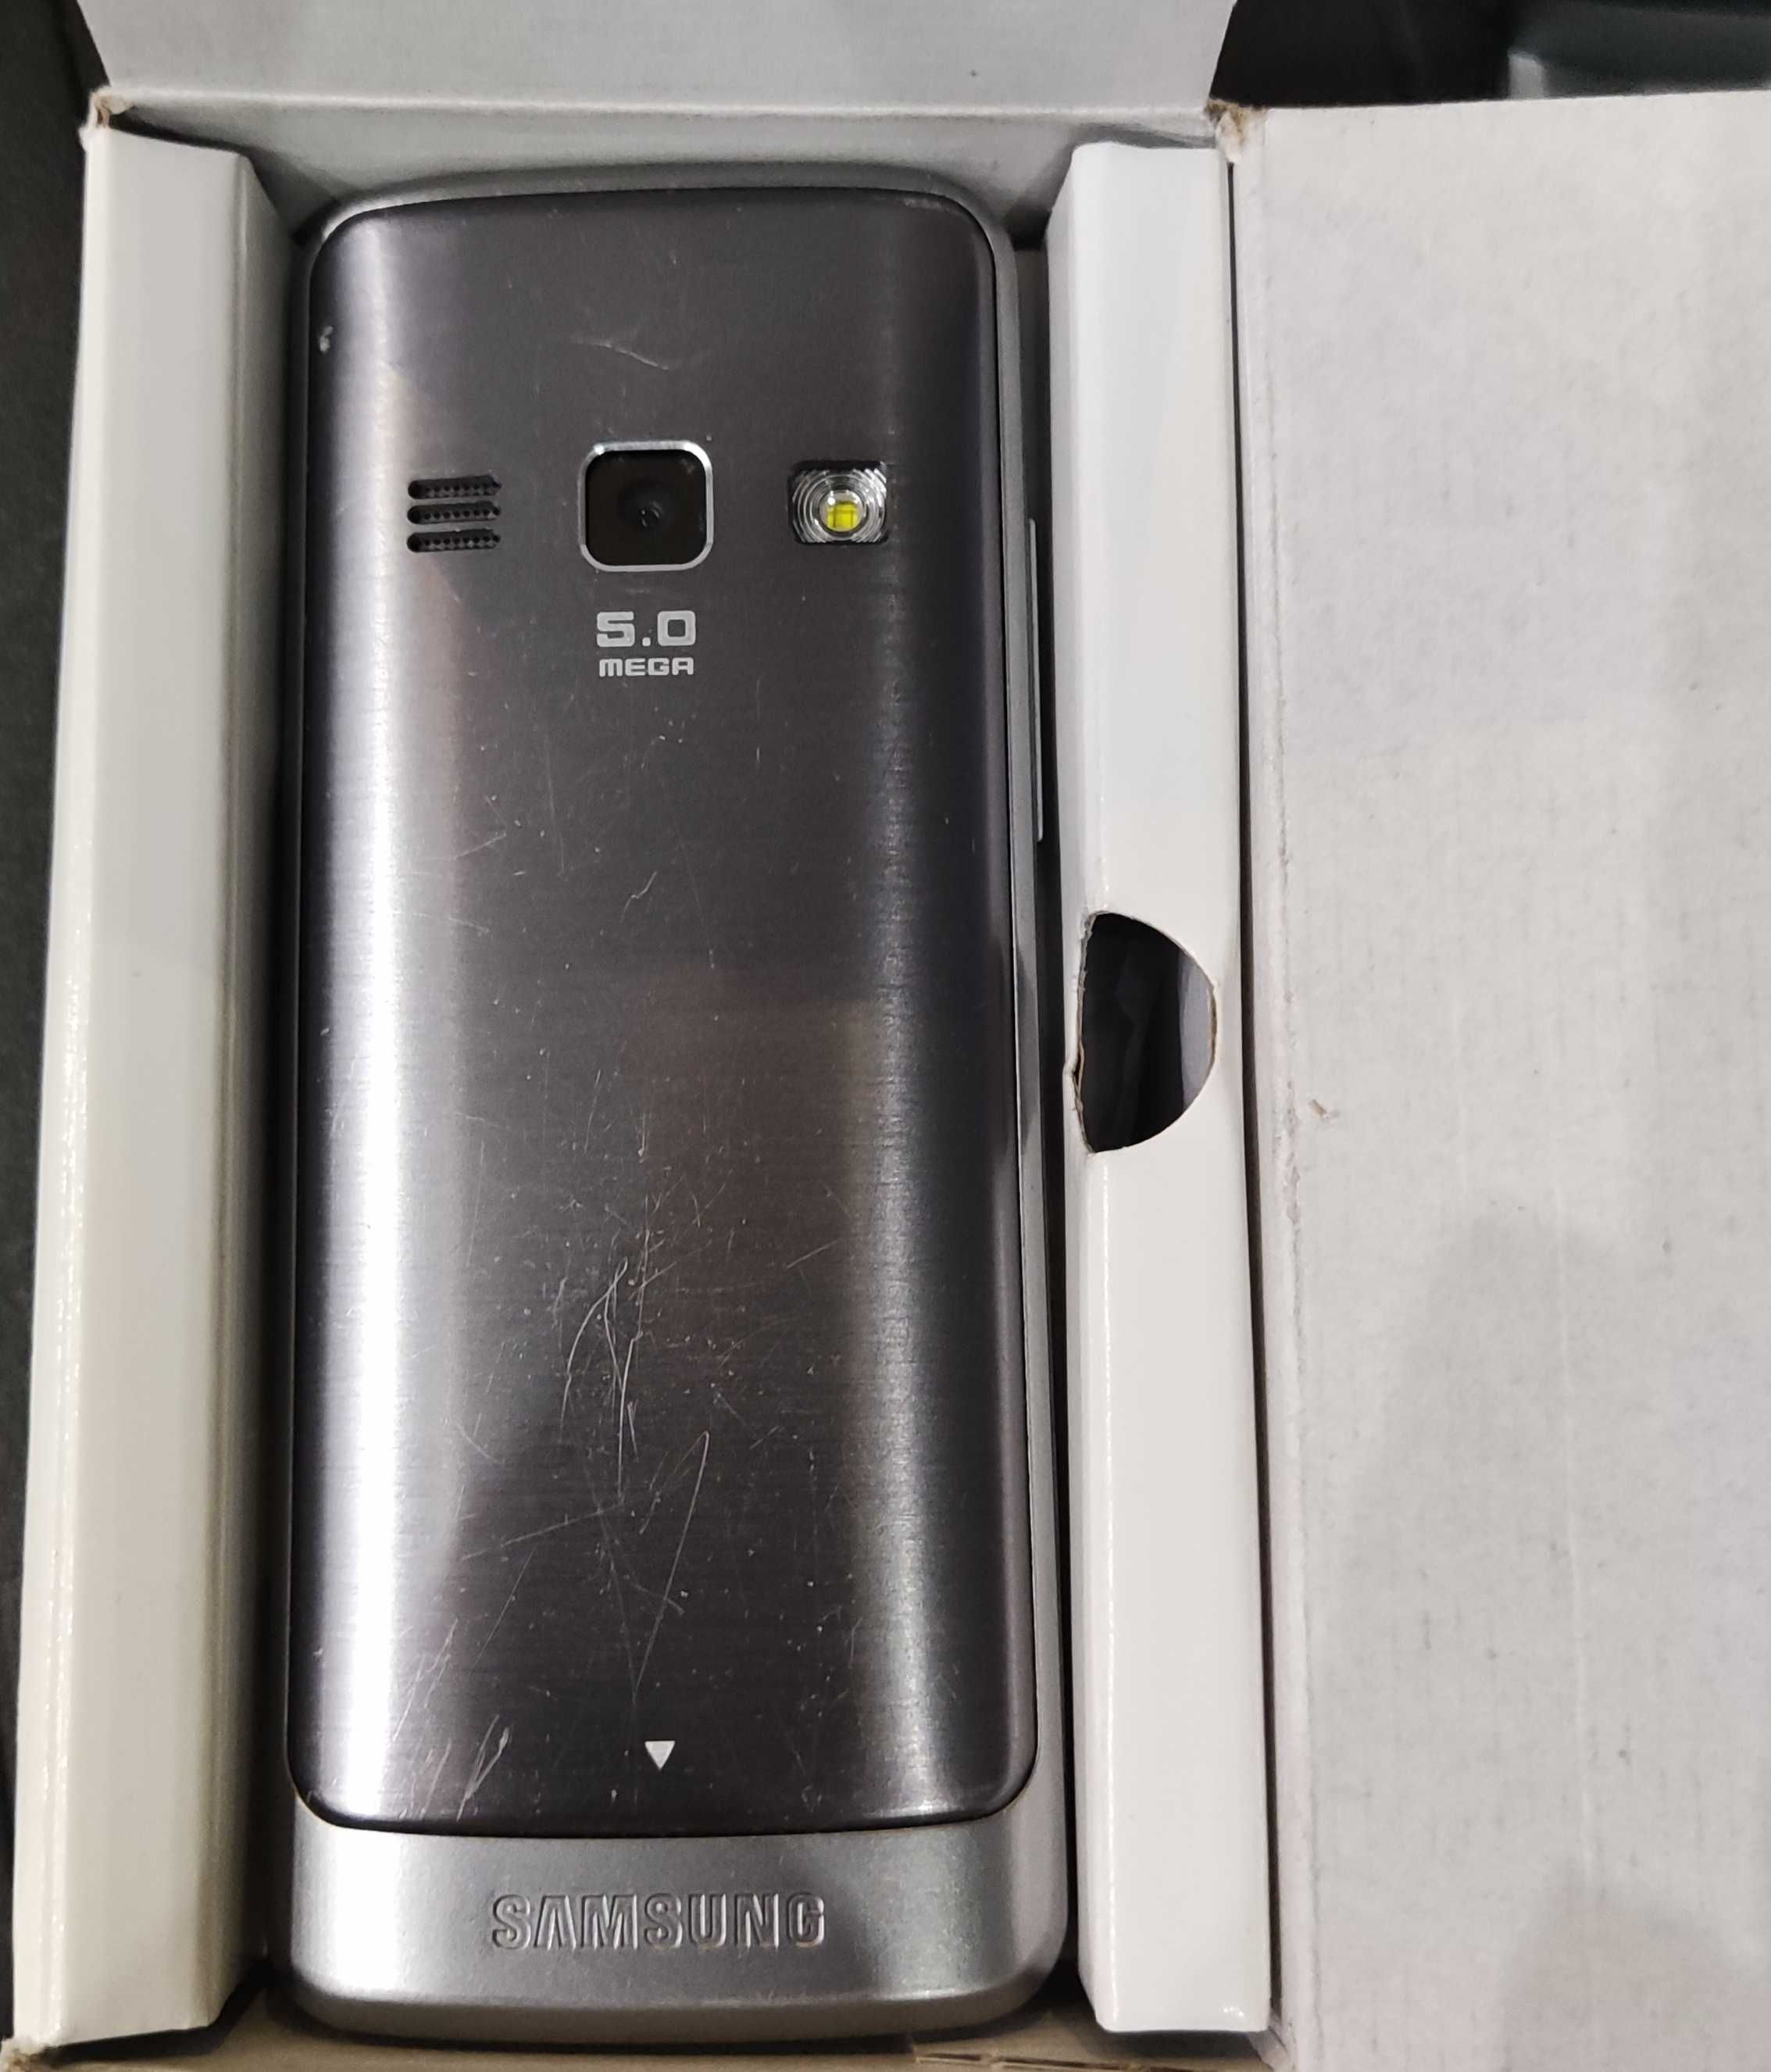 Sprzedam telefon SAMSUNG GT-S5611 ( 5 .0 MEGA ) kolor Metalic Silver